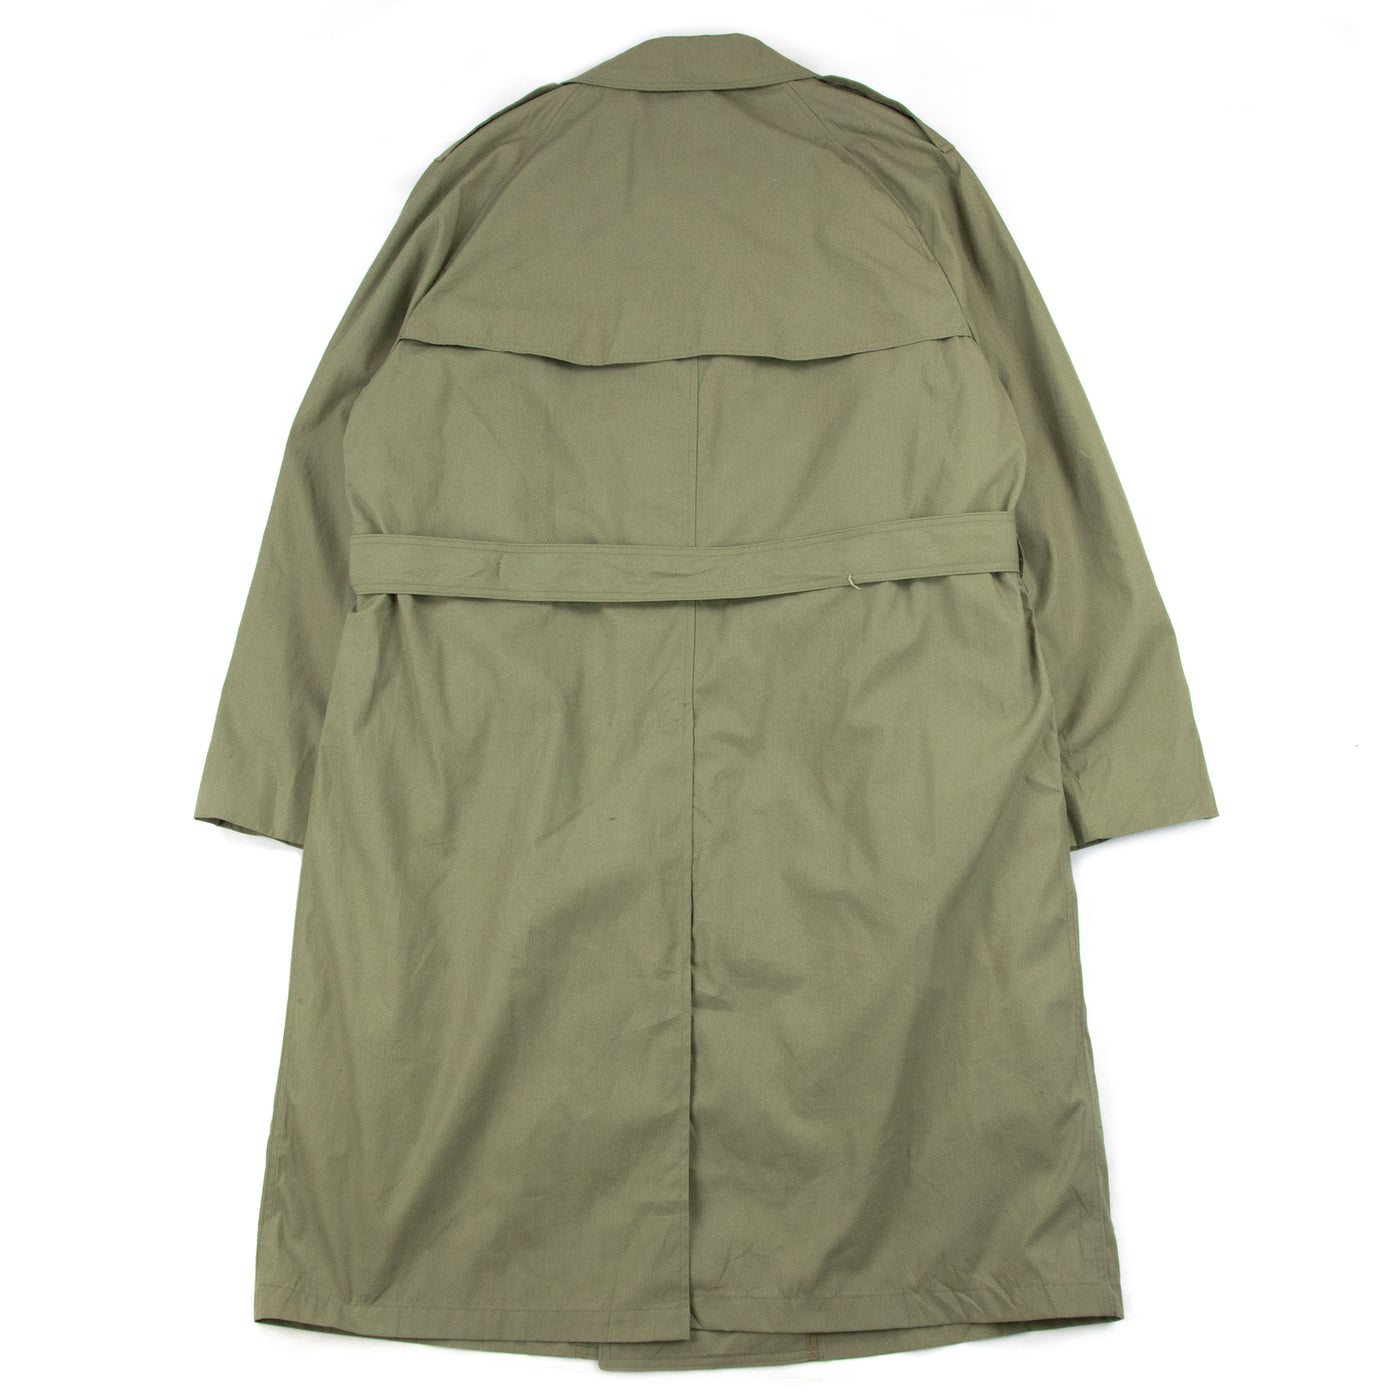 Vintage 2001 Deadstock US Army DSCP Military Rain Coat - XL